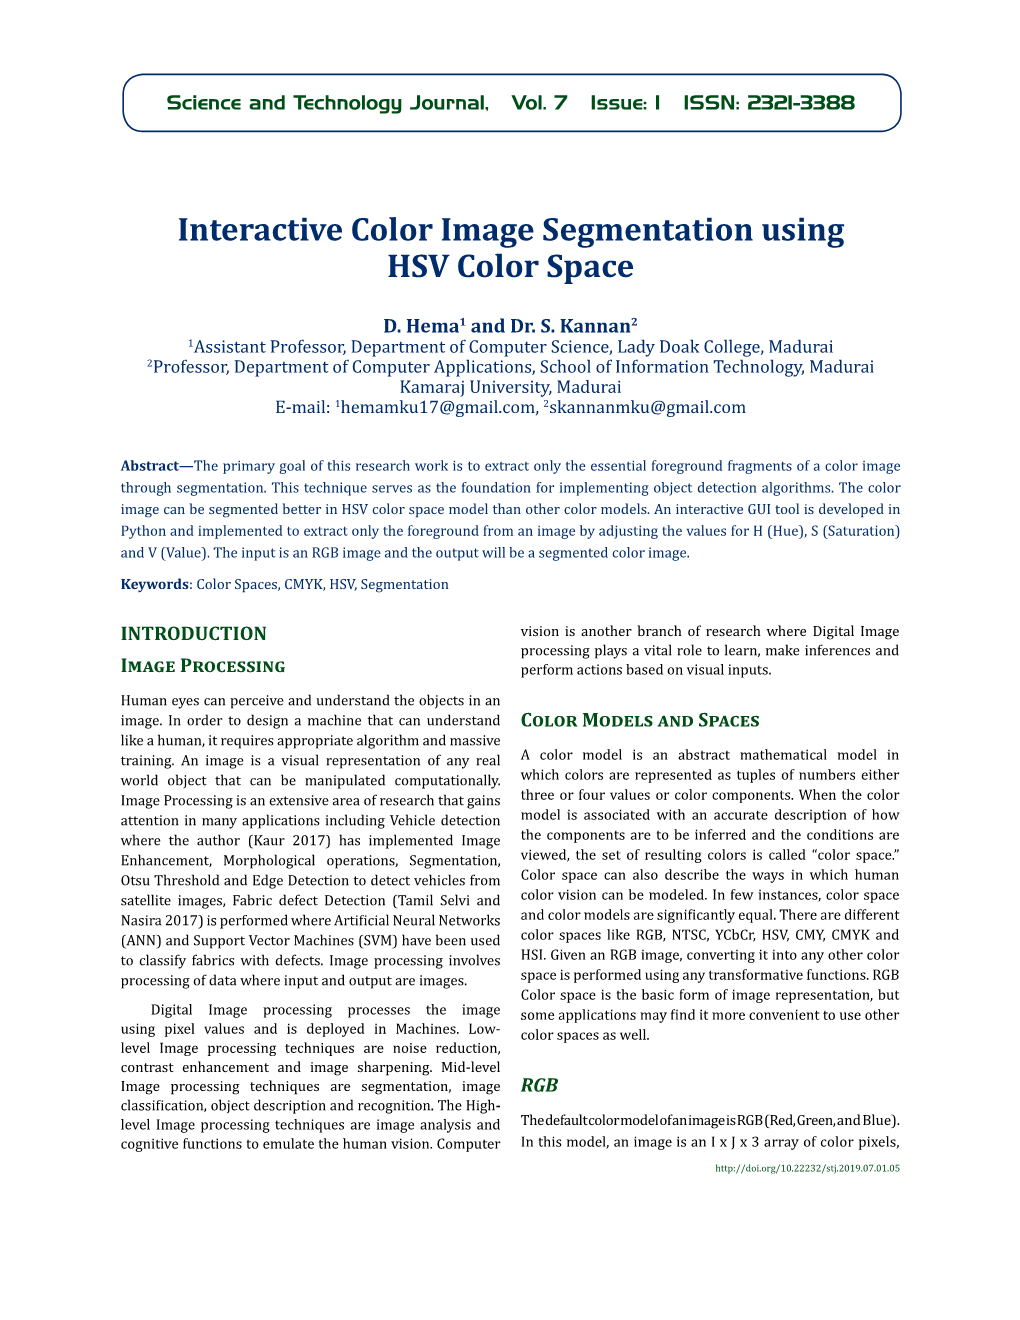 Interactive Color Image Segmentation Using HSV Color Space